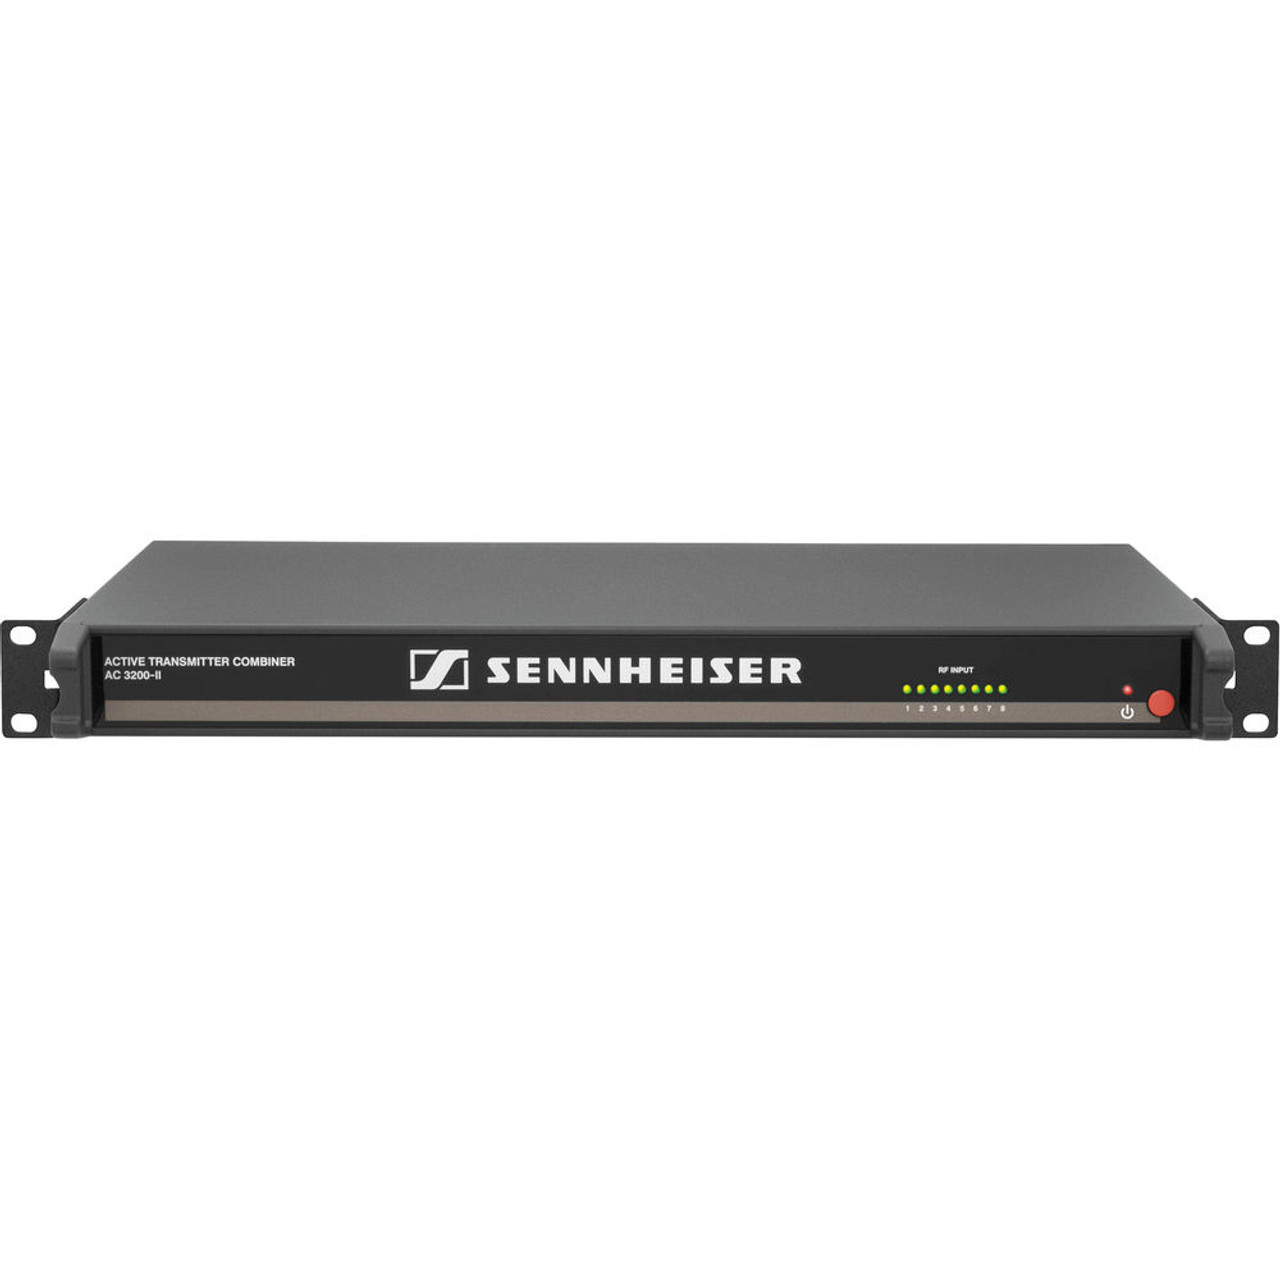 Sennheiser AC 3200-II 8:1 Active Transmitter / Antenna Combiner